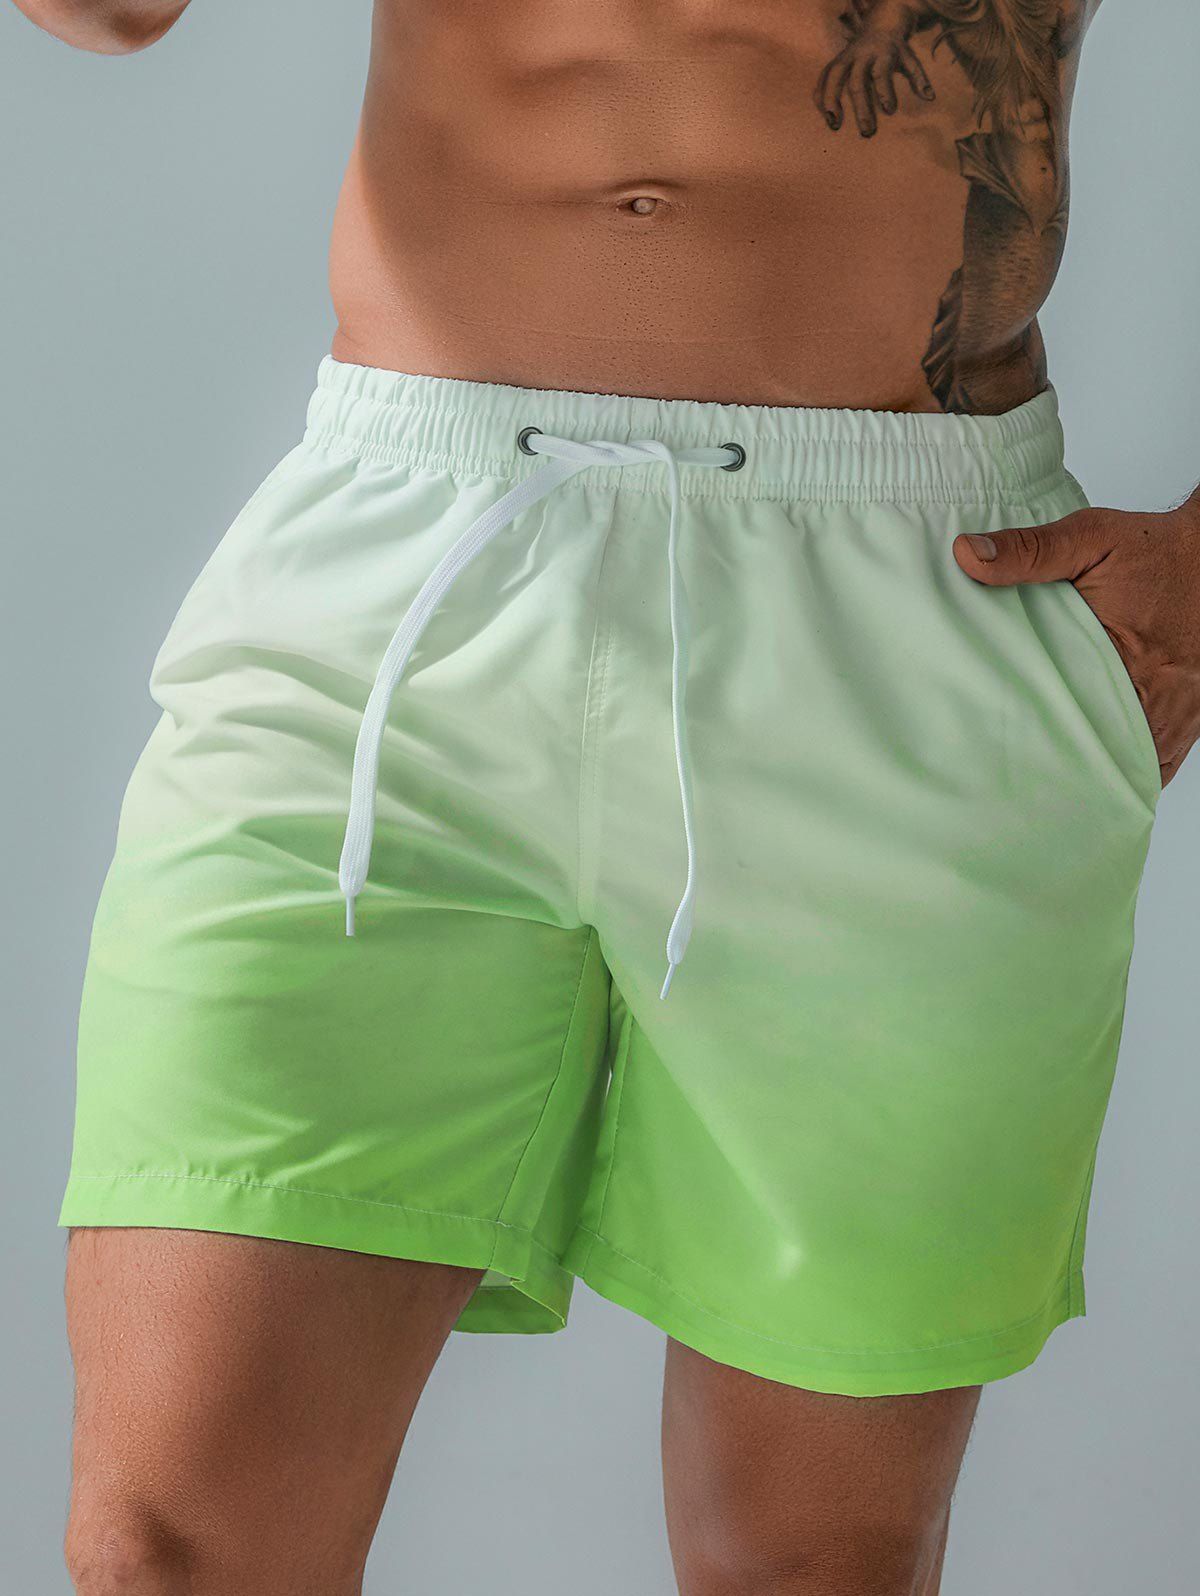 Vacation Ombre Casual Board Shorts Drawstrings Pockets Summer Beach Shorts - GREEN S